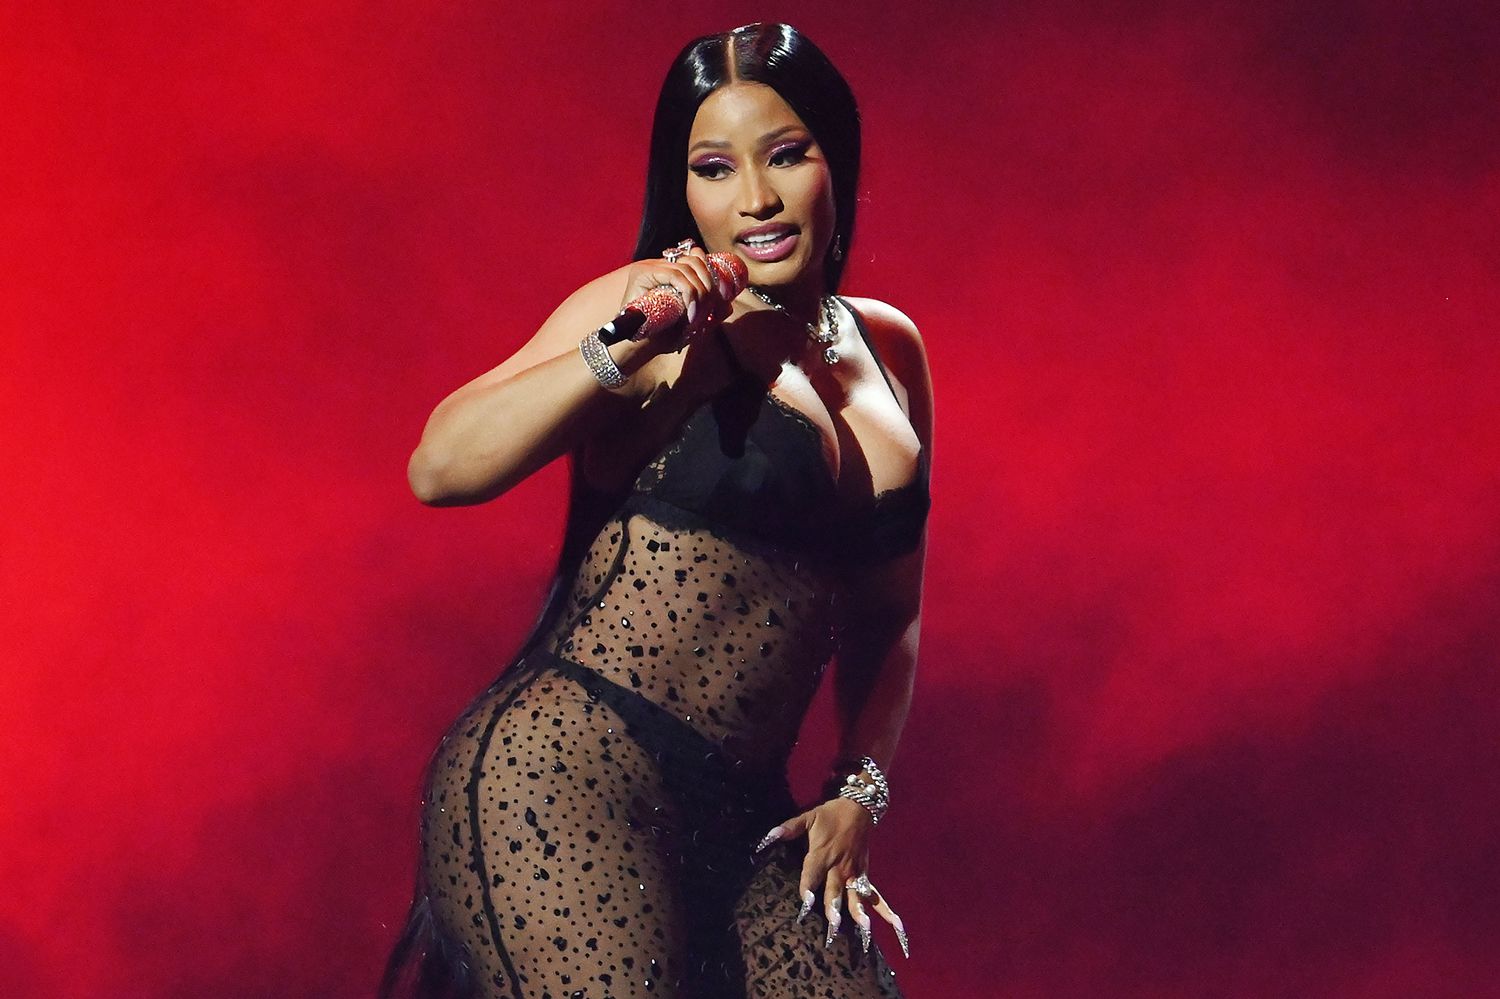 Nicki Minaj wearing a black mesh dress